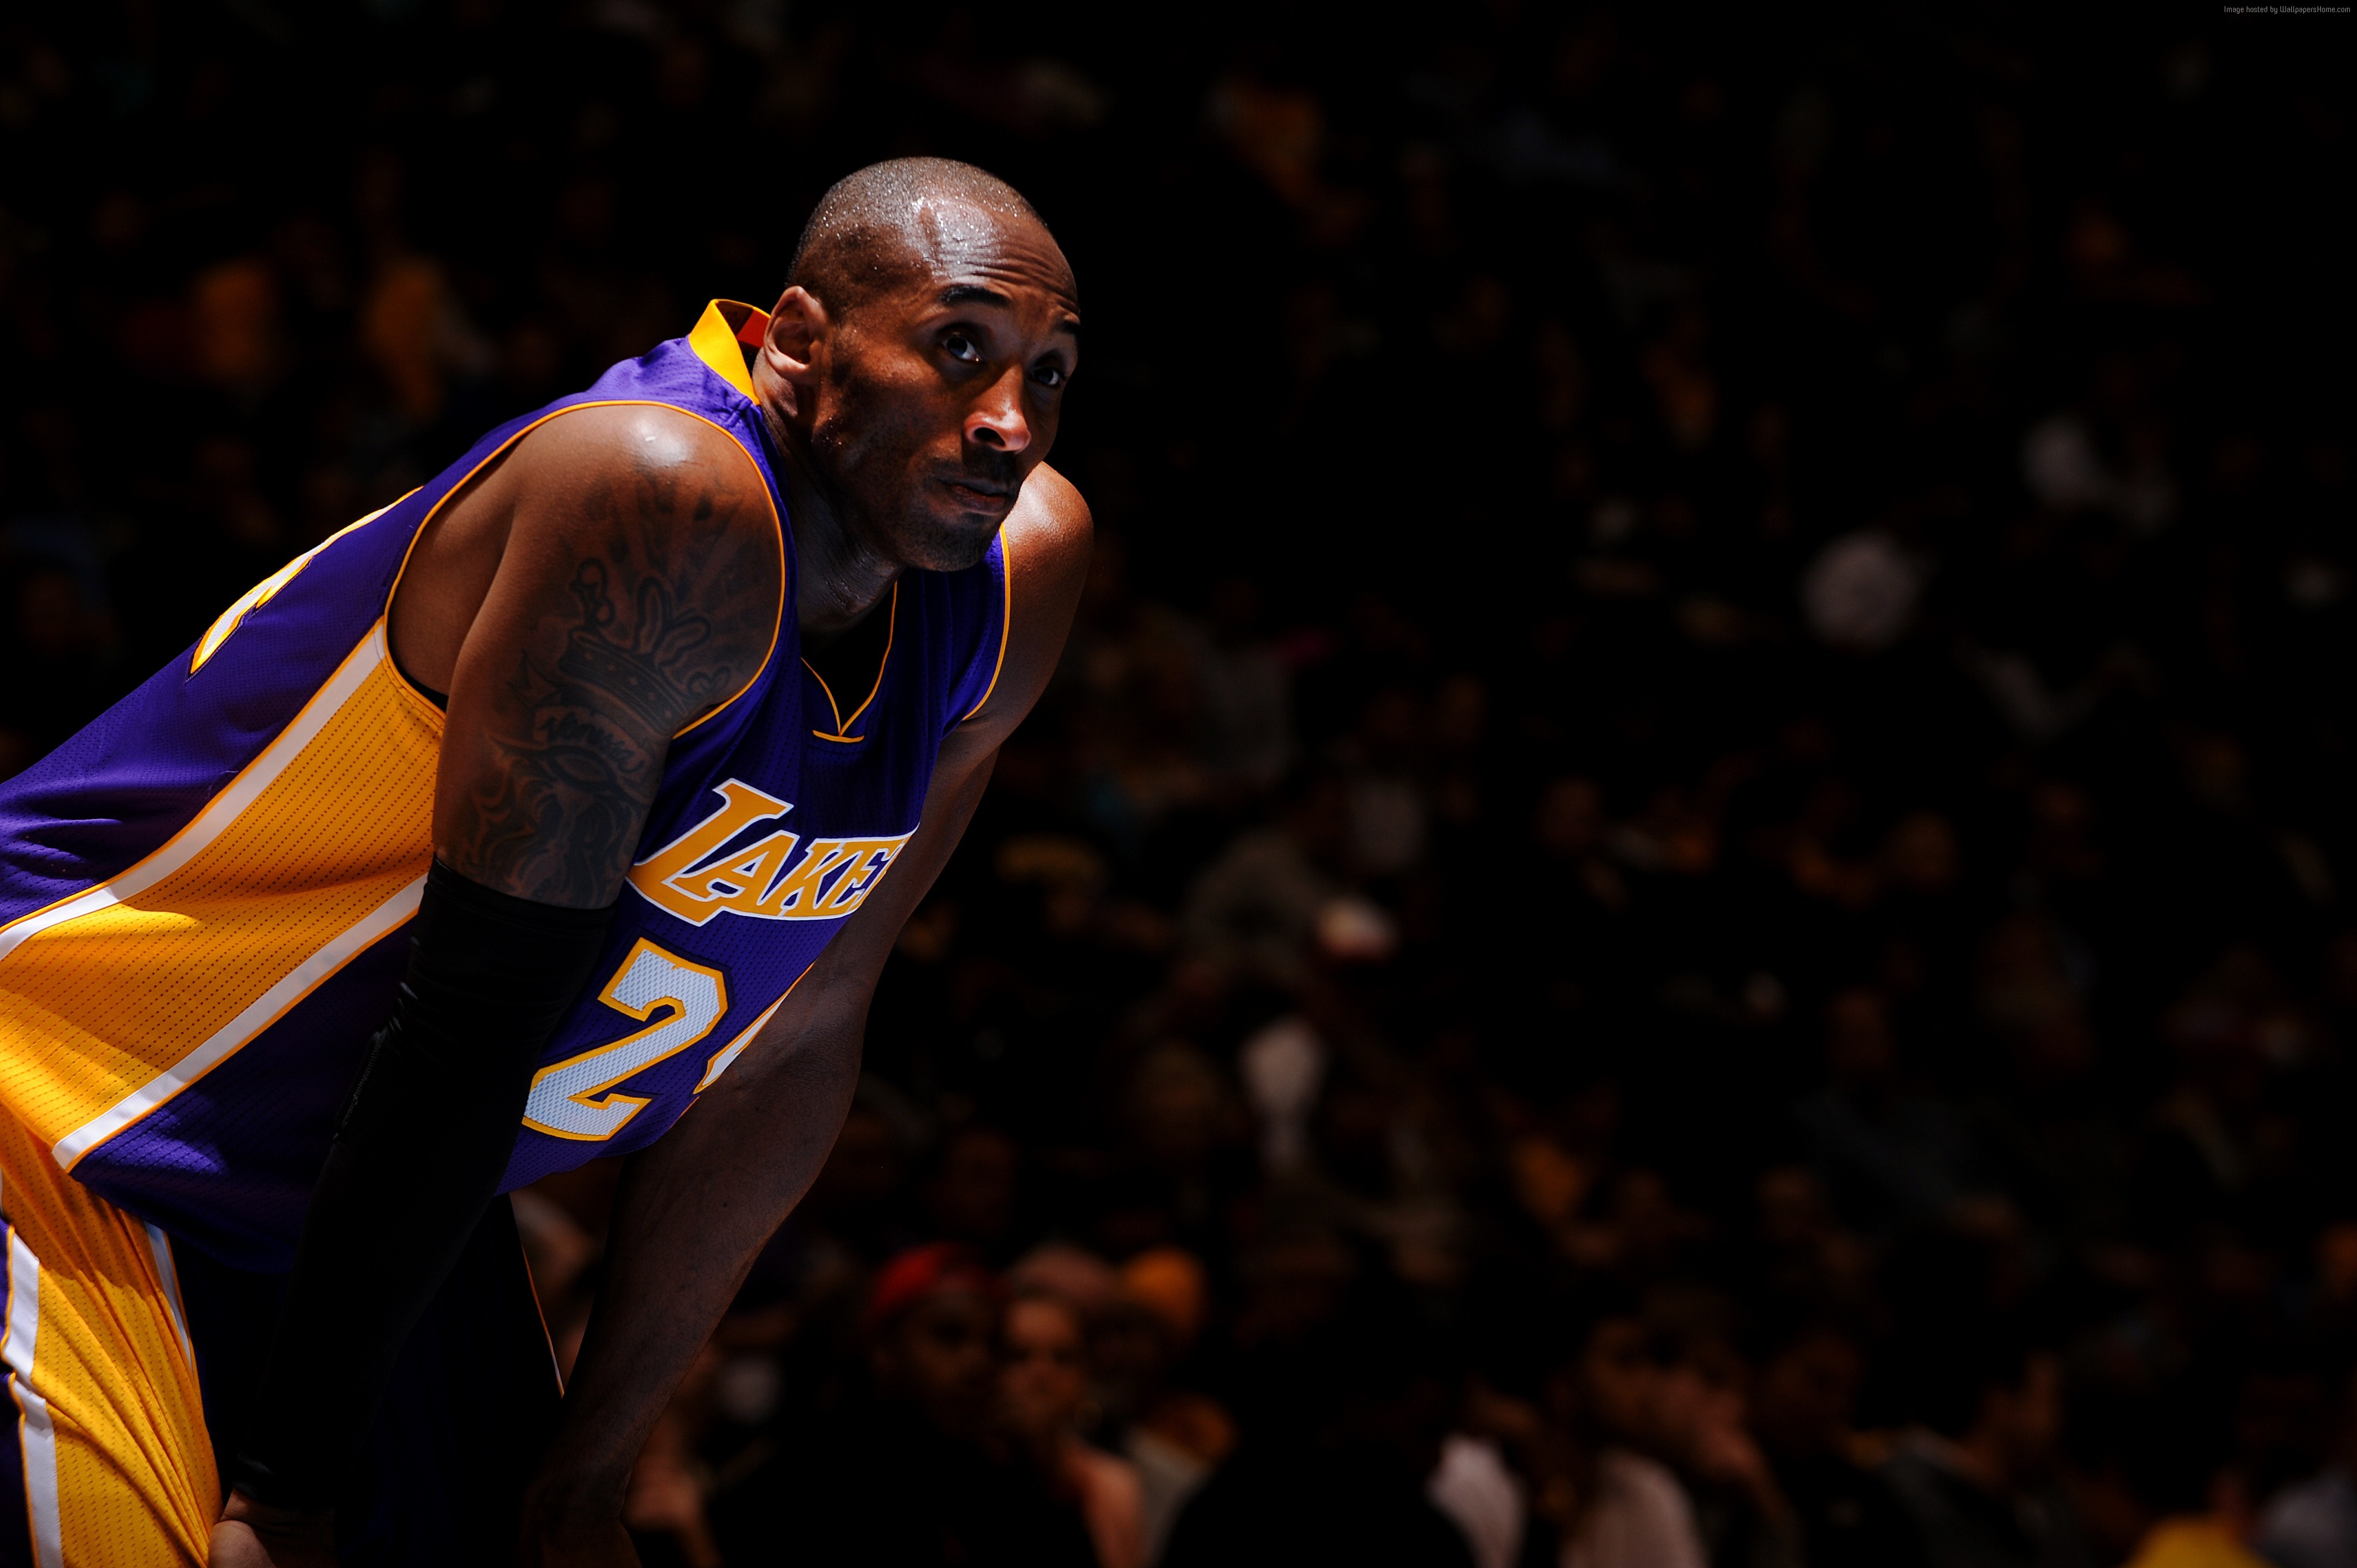 HD Kobe Bryant NBA Basketball Wallpaper HD Full Size ...